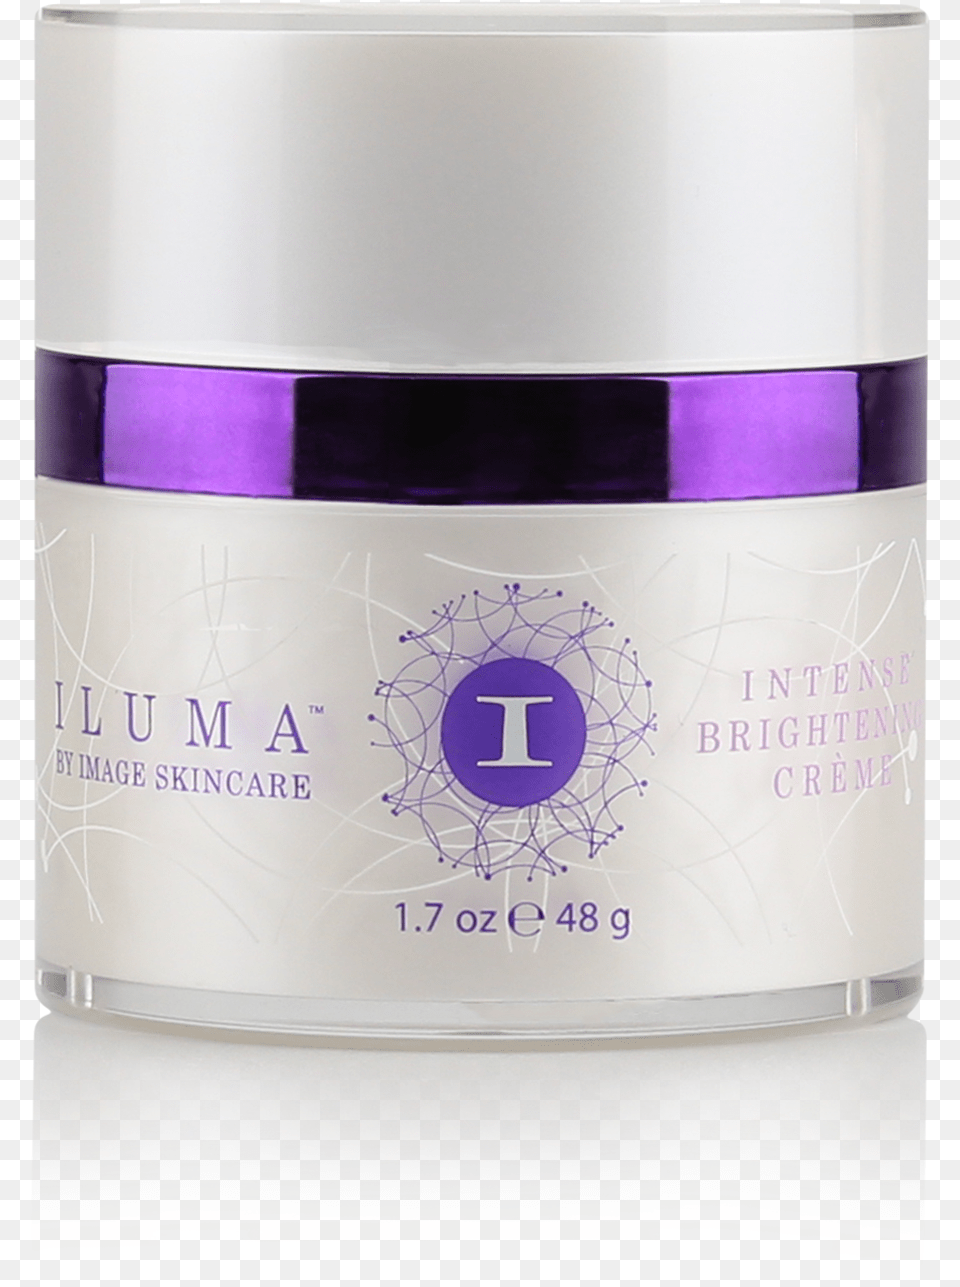 Iluma Brightening Creme 20 Jan 2018 Skincare Iluma Intense Brightening Creme, Bottle, Cosmetics, Deodorant, Tape Png Image